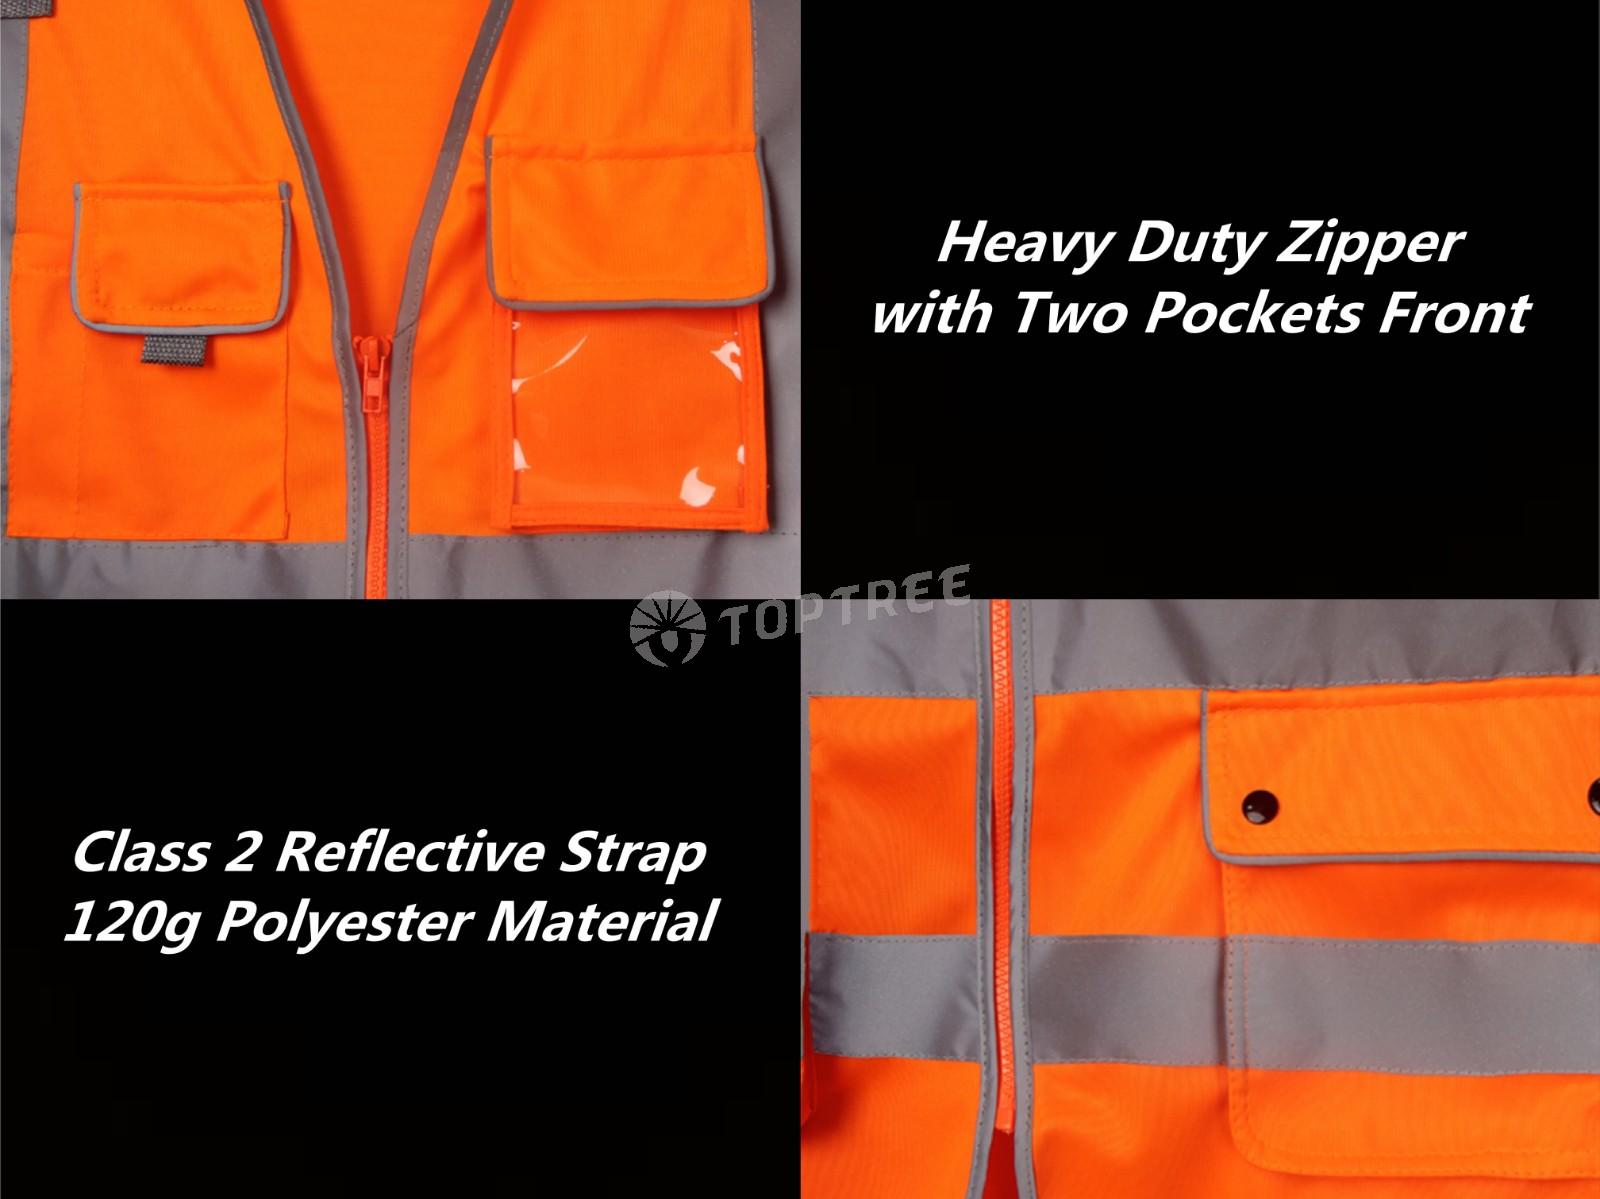 High Visibility Safety Jacket Front Safety Reflective Vest Workwear Construction Shirt